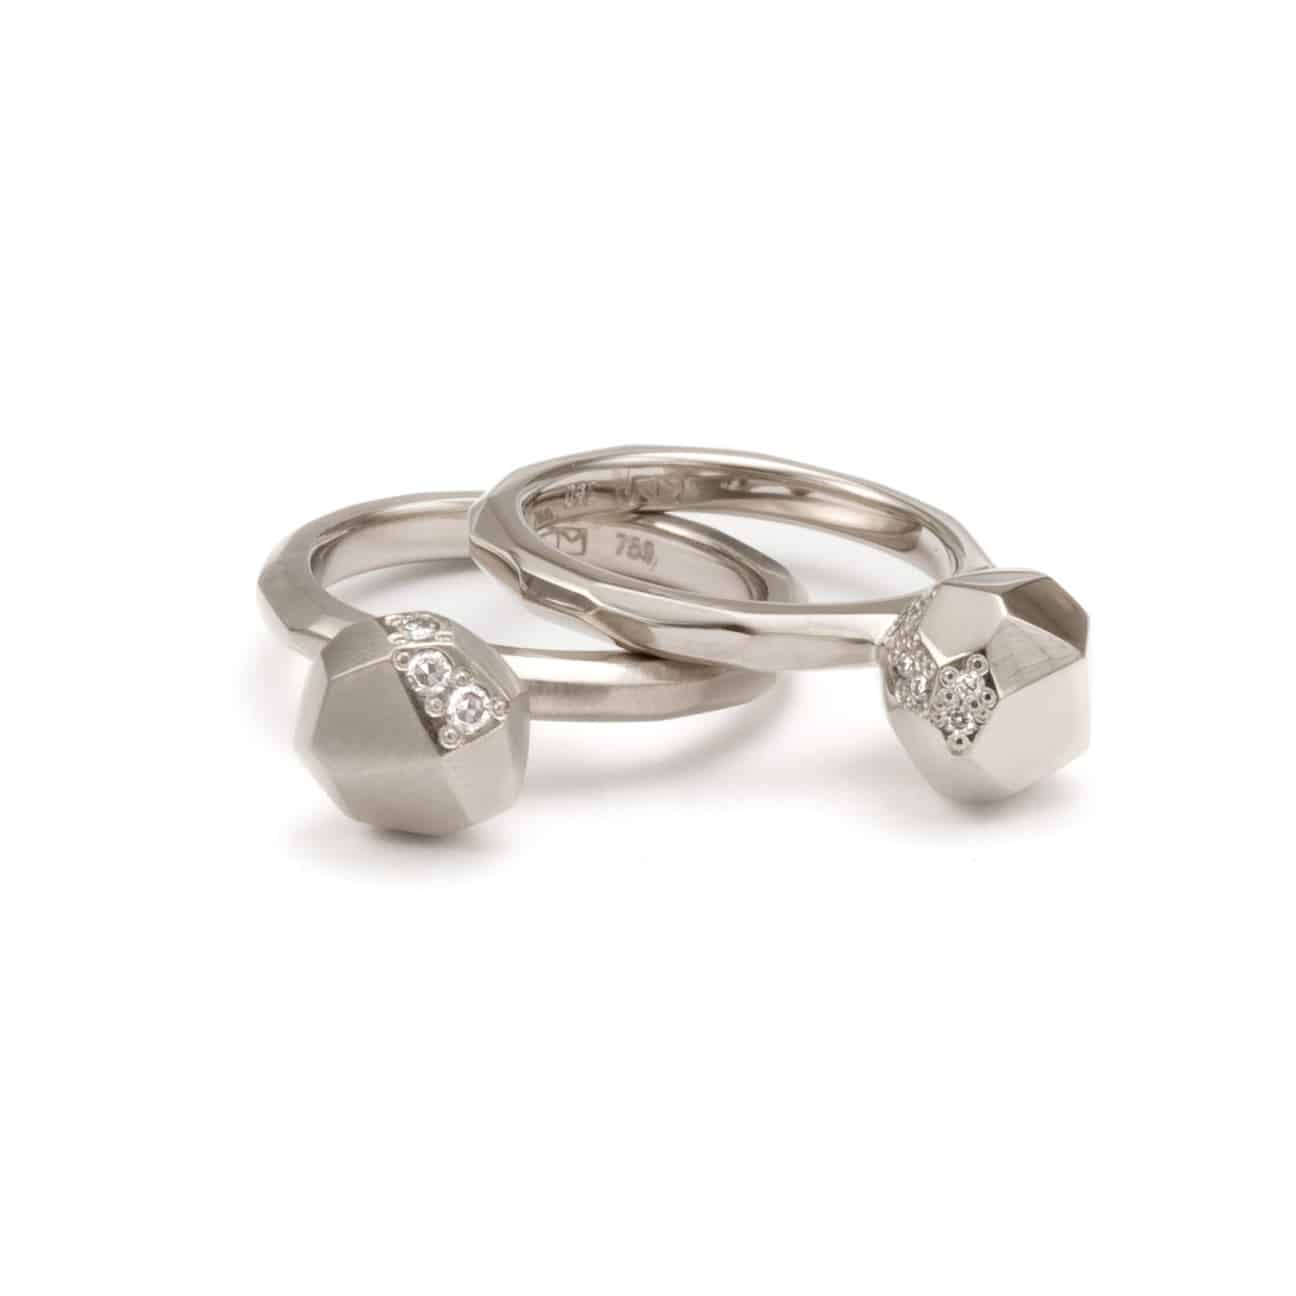 Unique engagement rings by Australian jewelers / Krista McRae